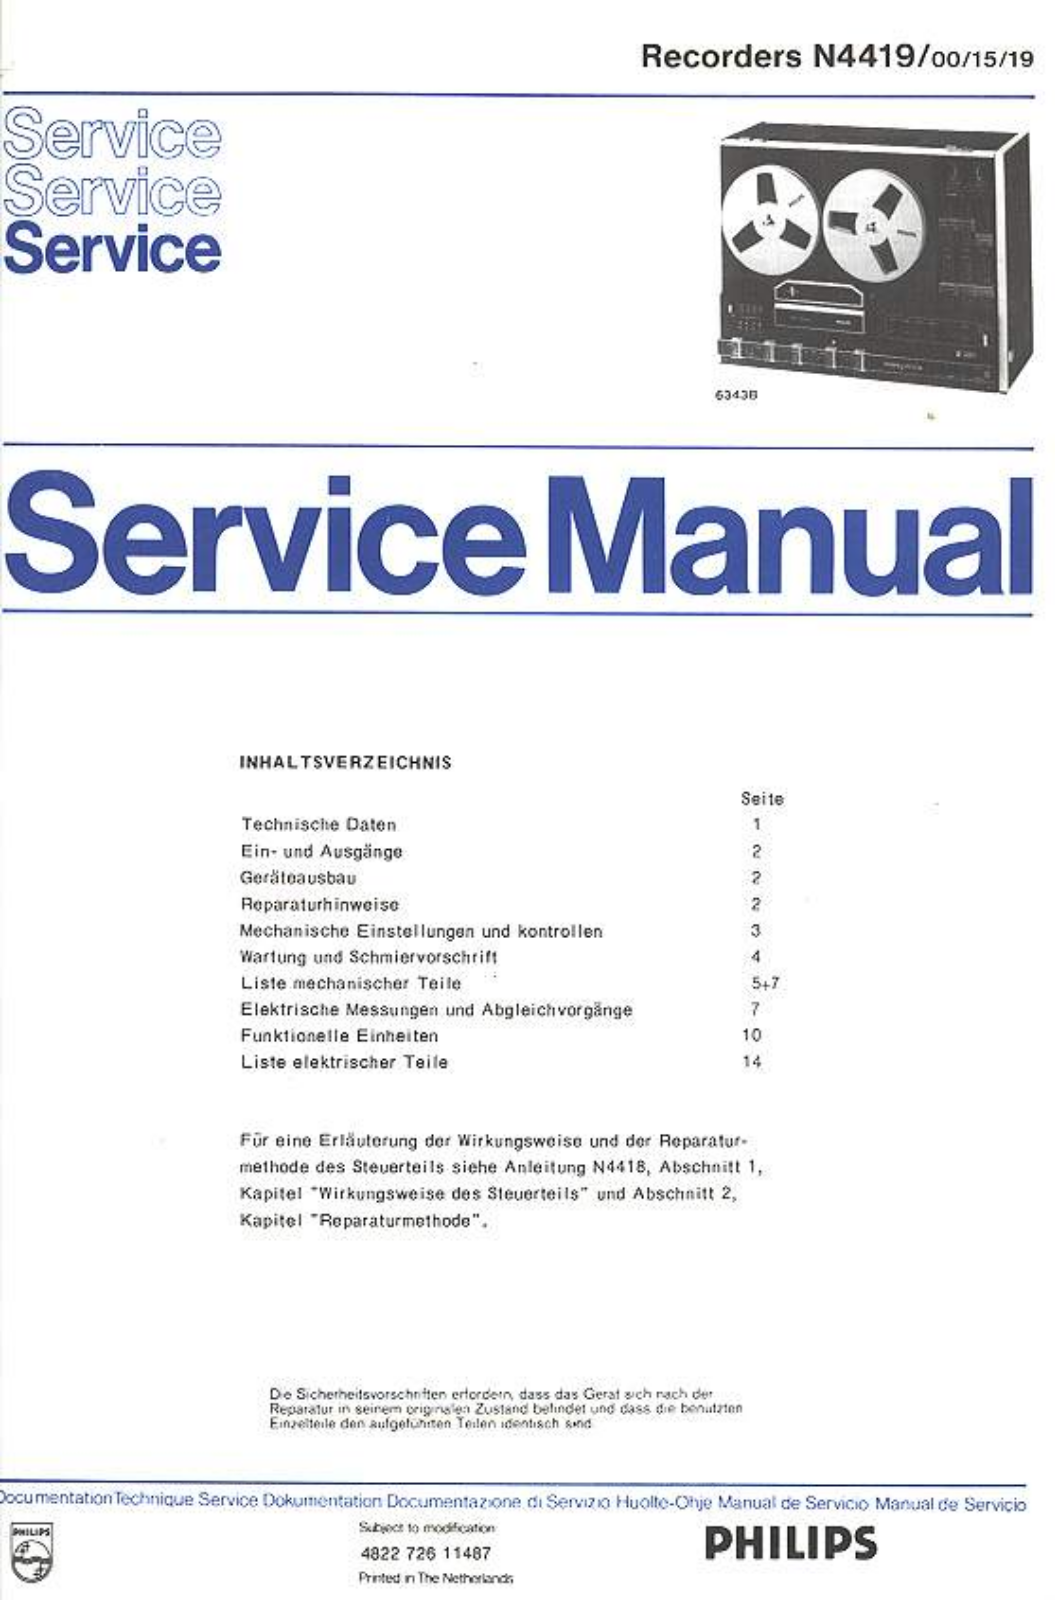 Philips N-4419 Service Manual